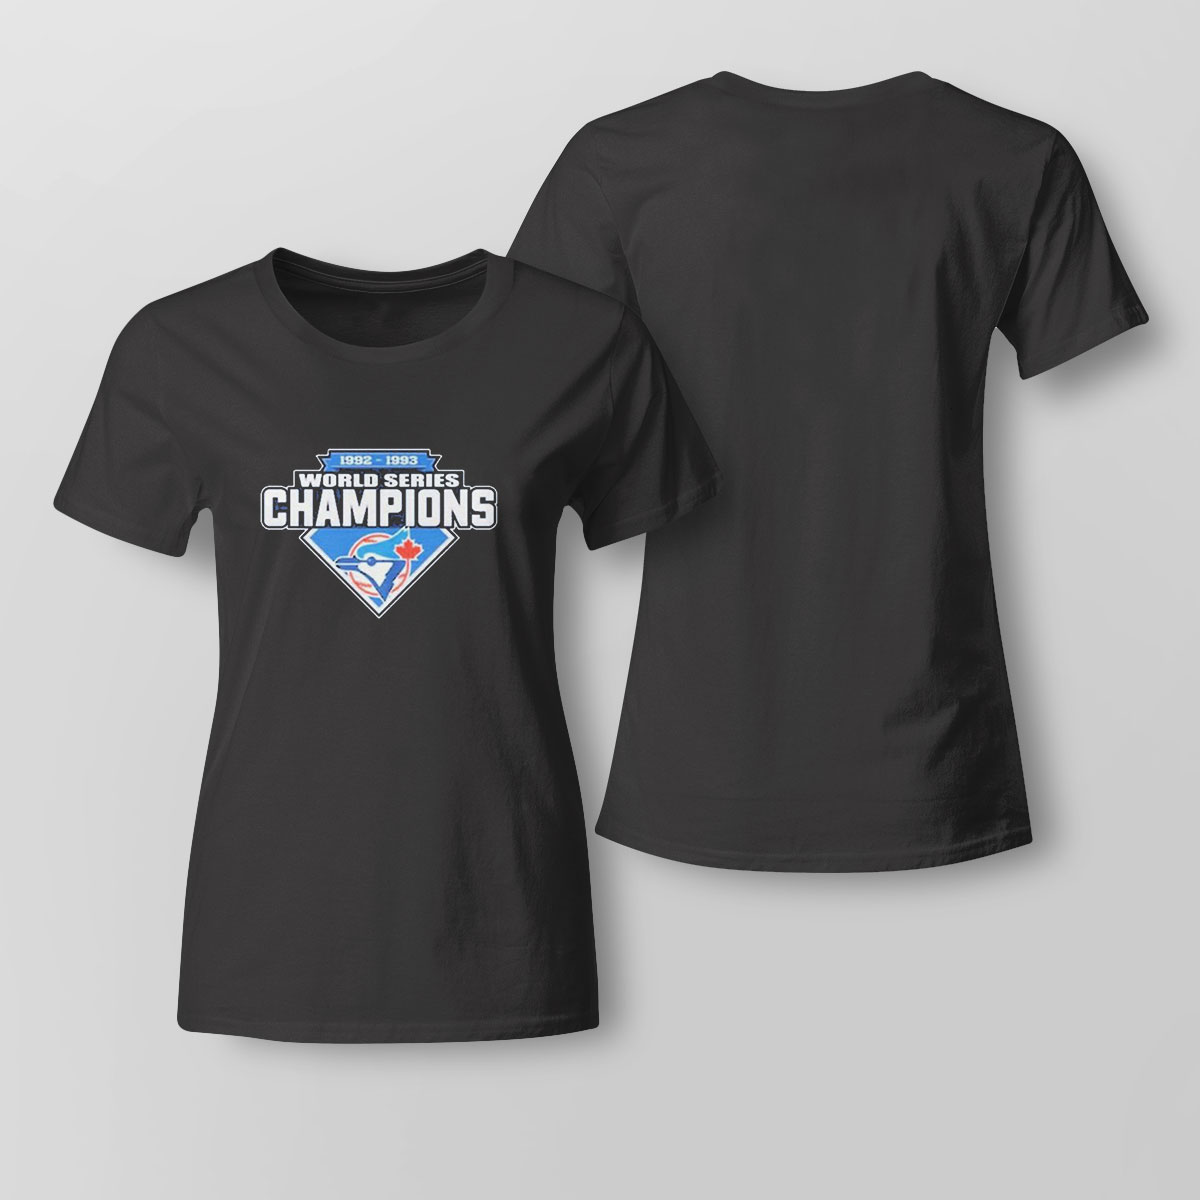 Official 1992 toronto blue jays world series champions T-shirt